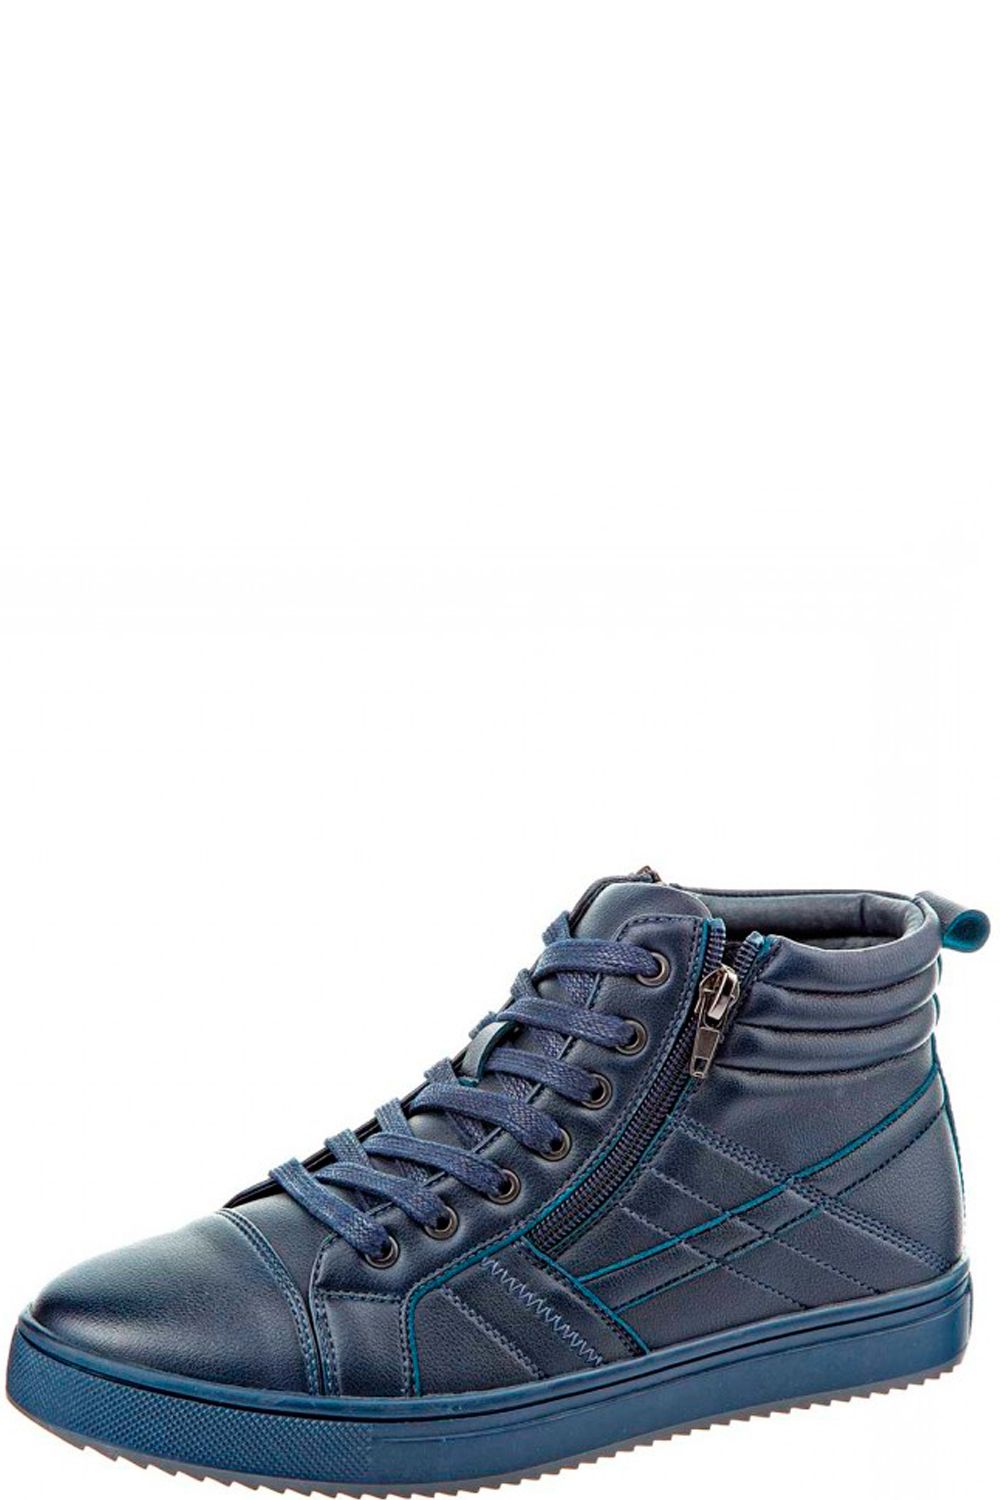 Ботинки Tesoro, размер 39, цвет синий 168679/01-12 - фото 1